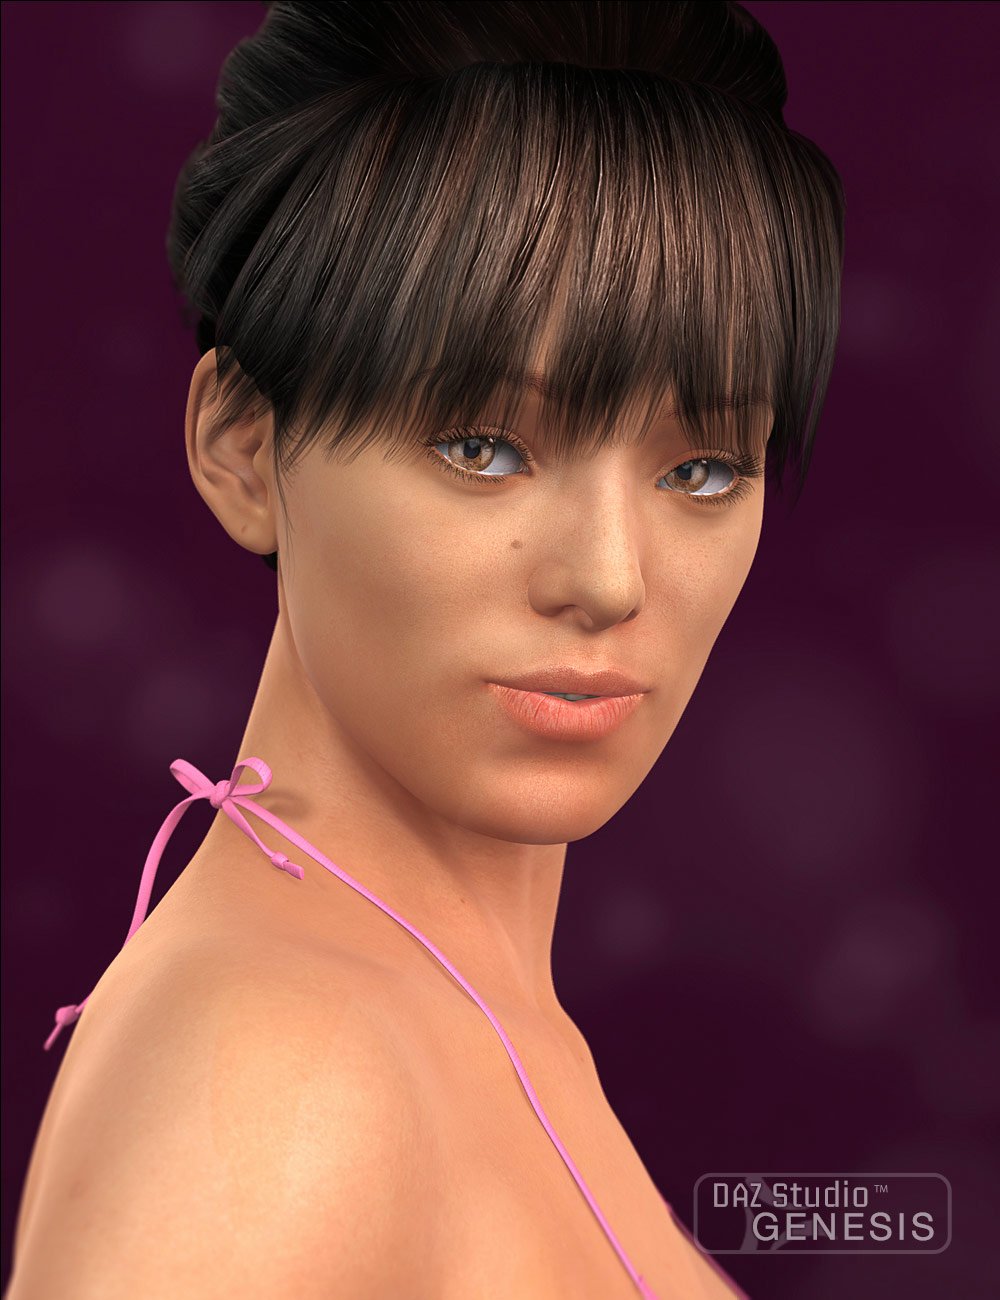 Stephanie 5 Elite Texture Joanie by: Morris, 3D Models by Daz 3D